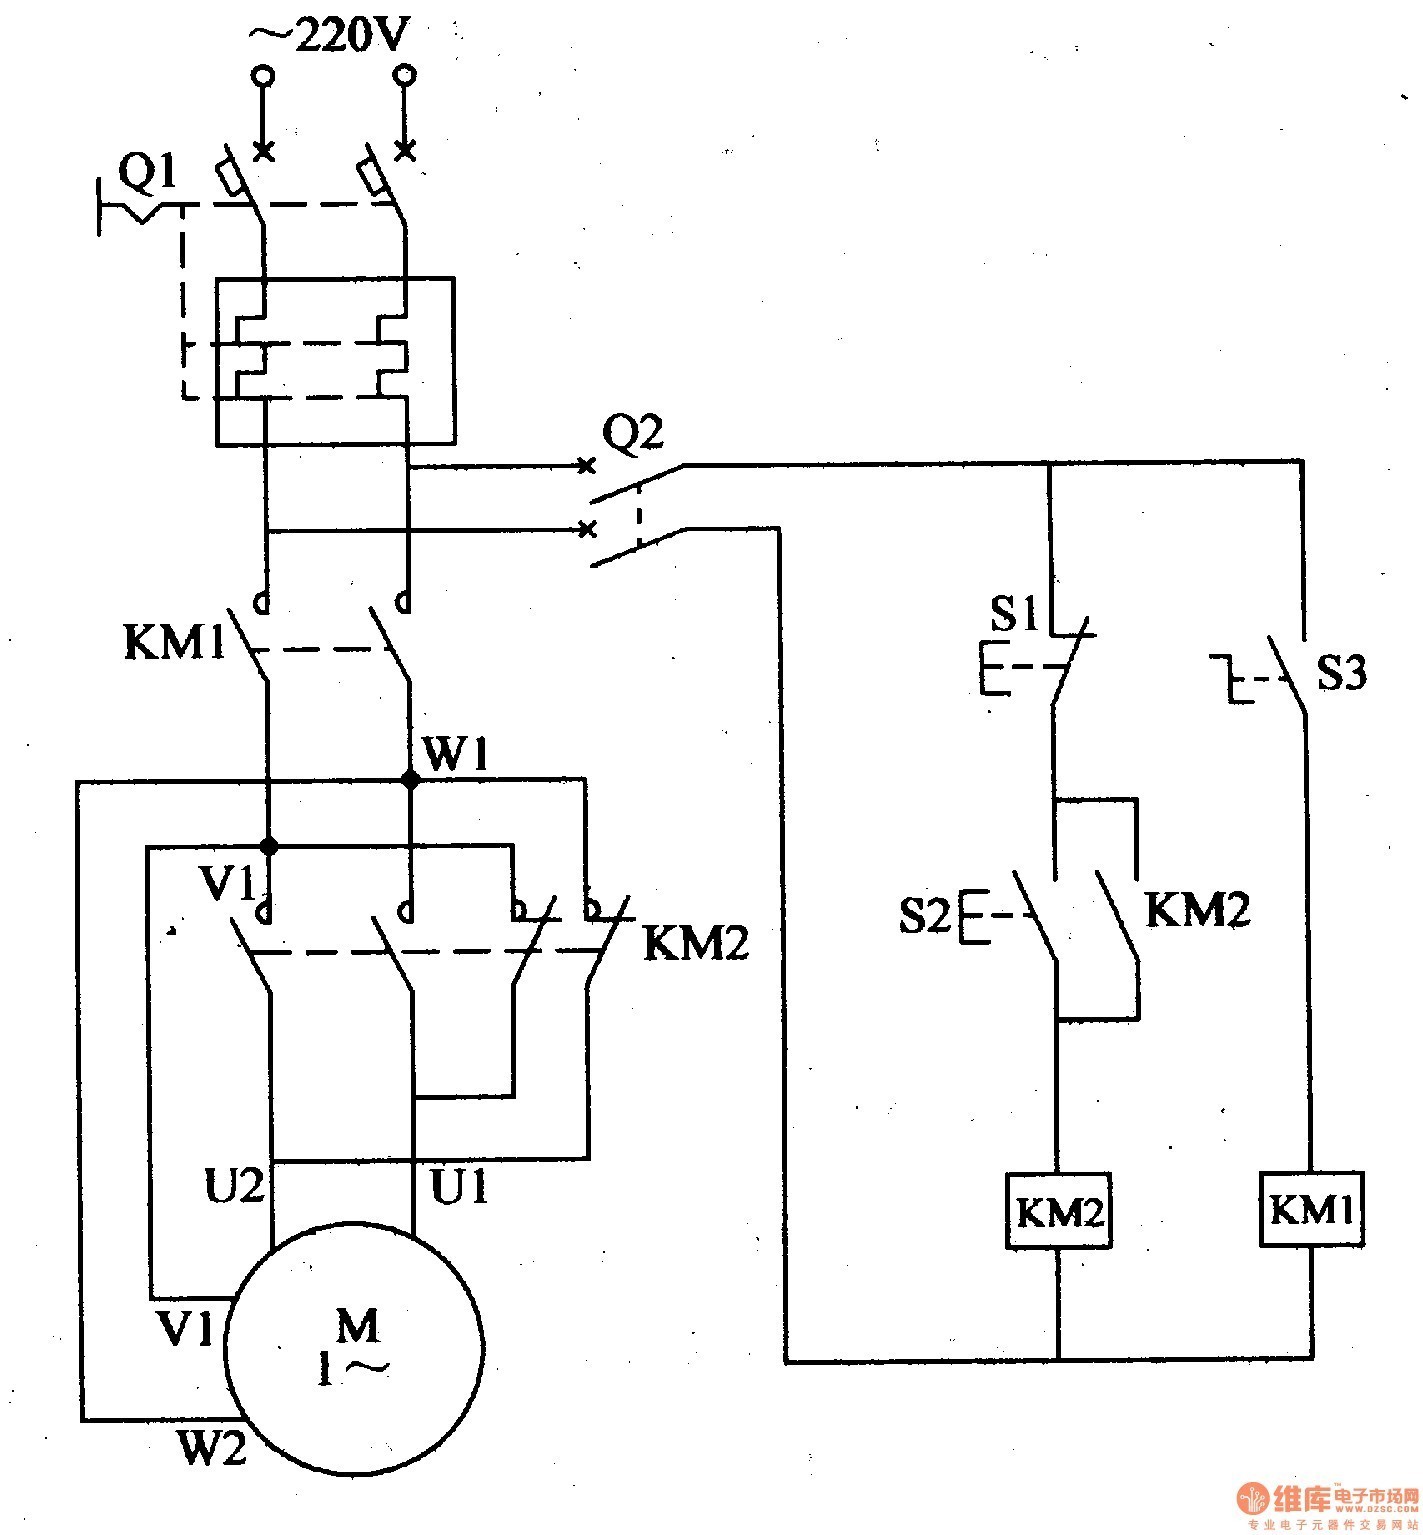 Electrical Wiring Diagrams Motor Starters Valid Wiring Diagram Motor Fresh Single Phase Motor Starter Wiring